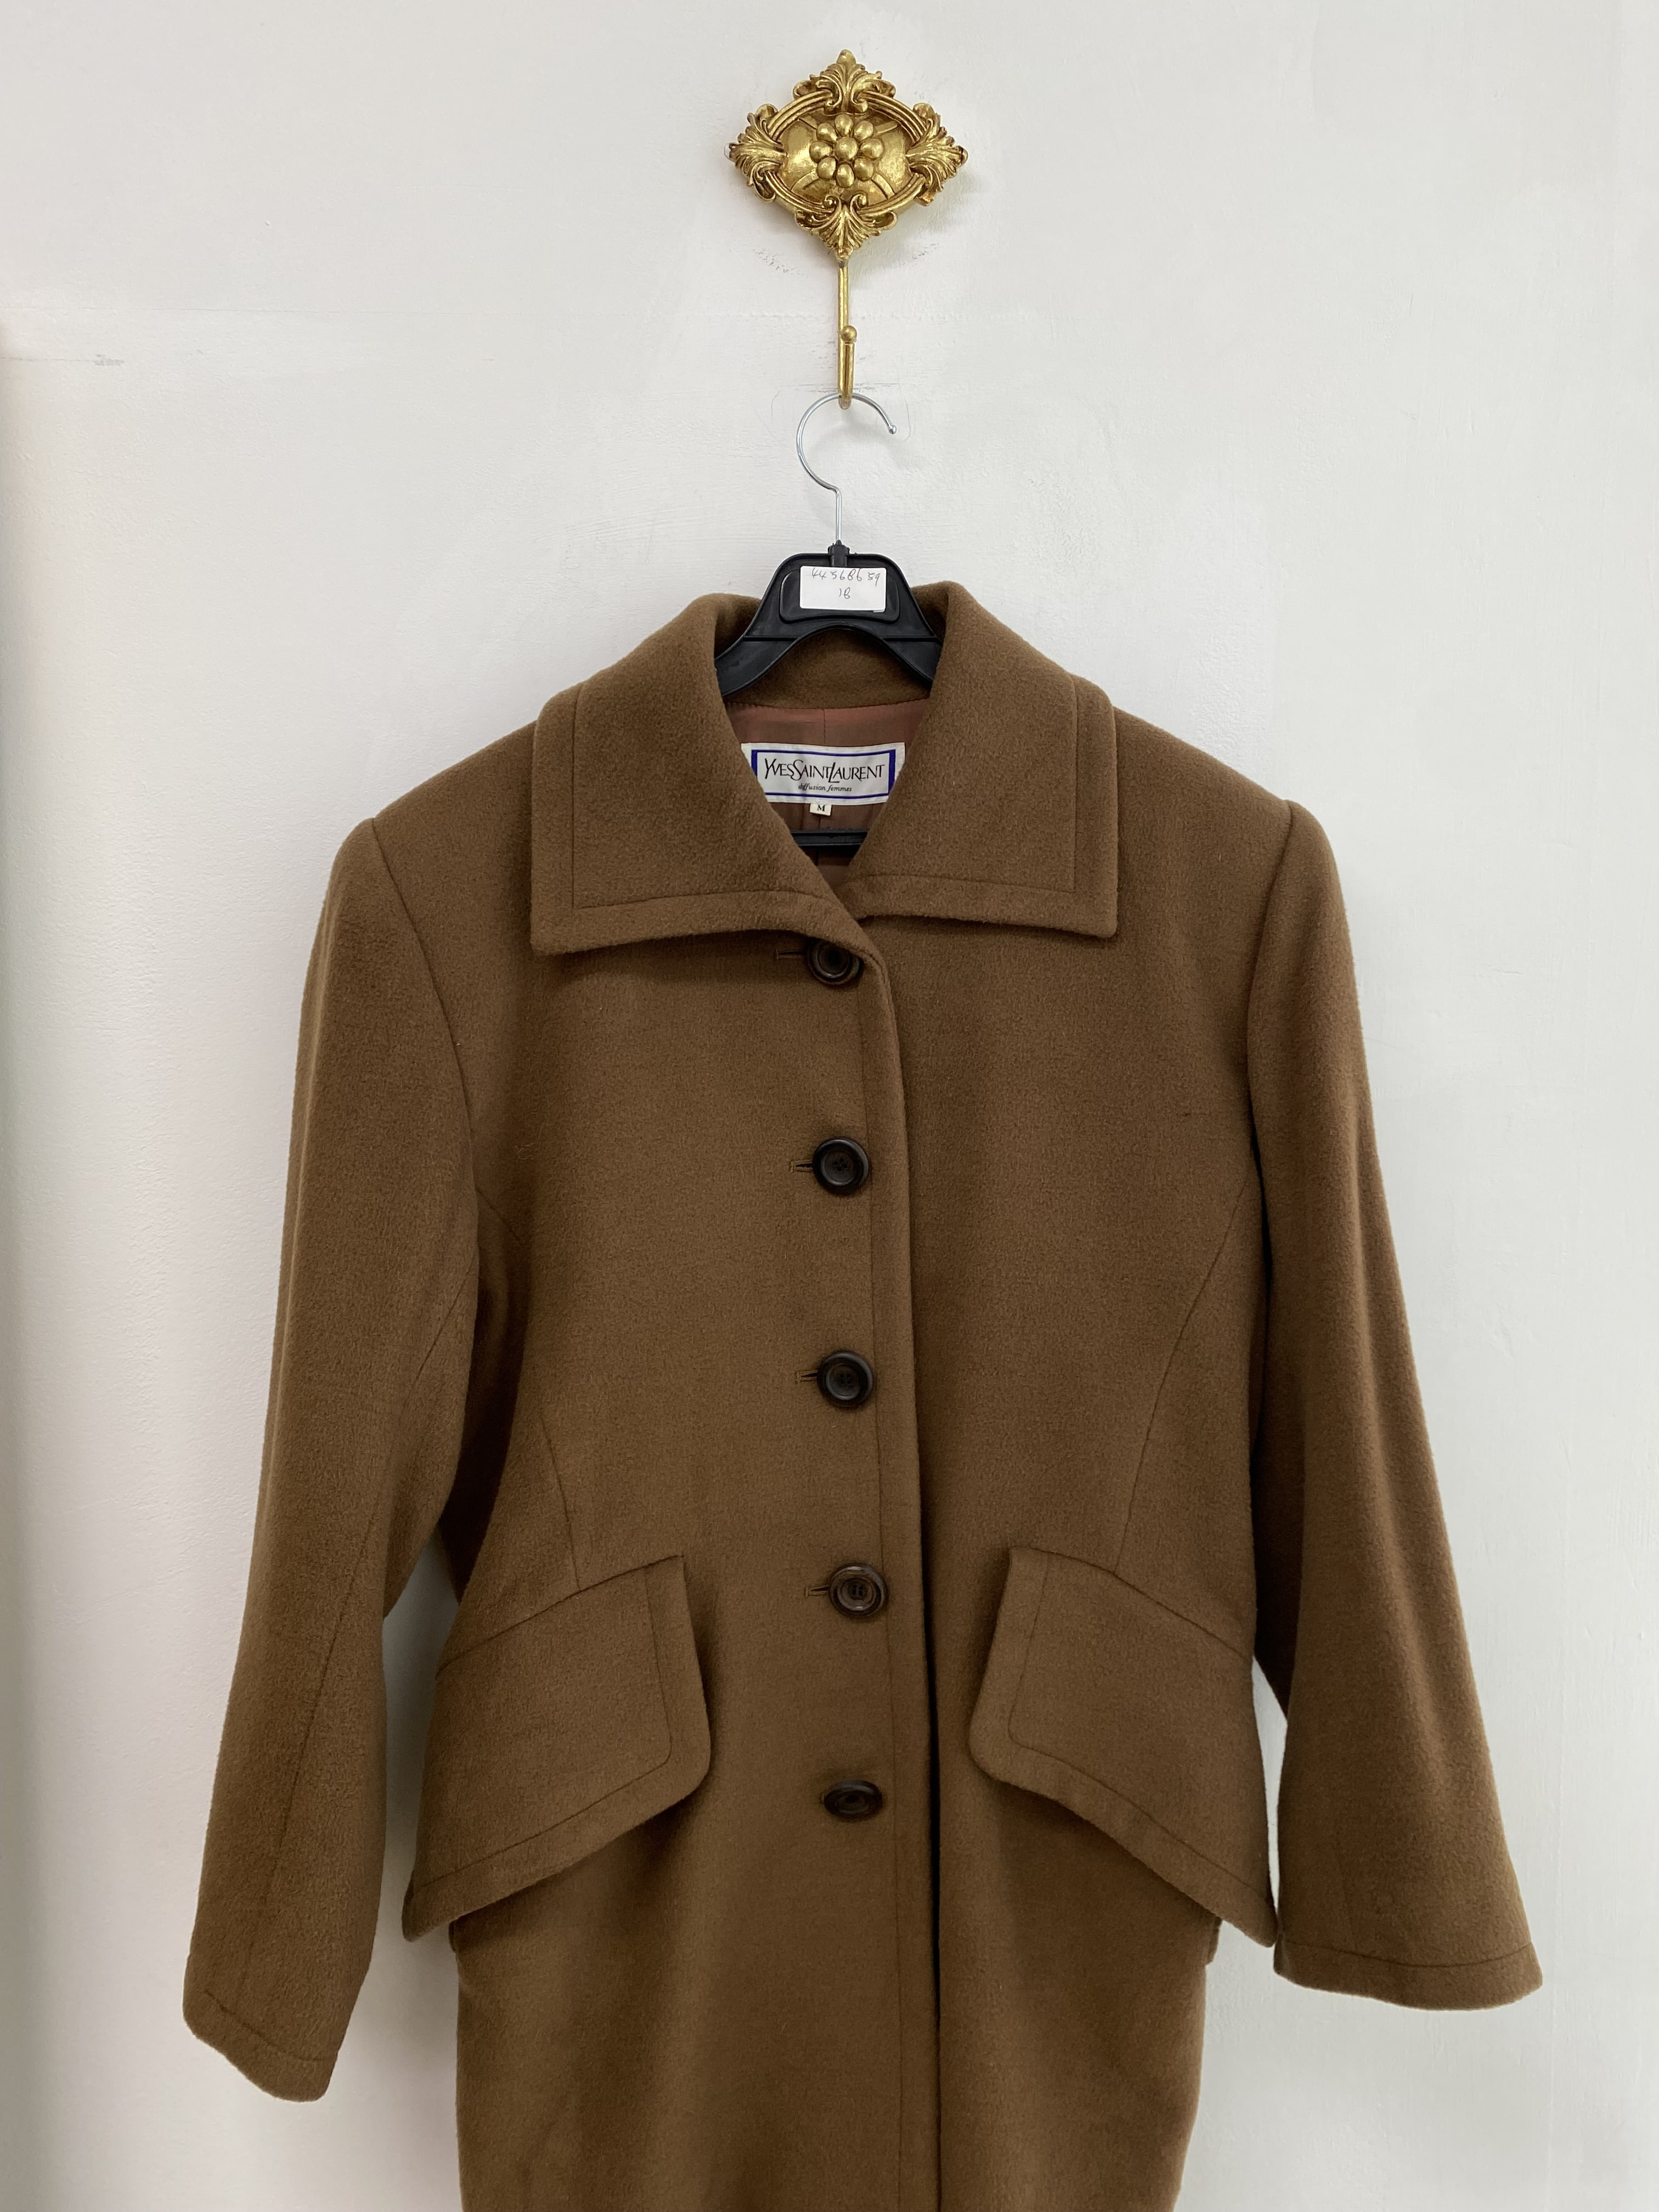 Yves Saint Laurent beige brown boxy wool coat